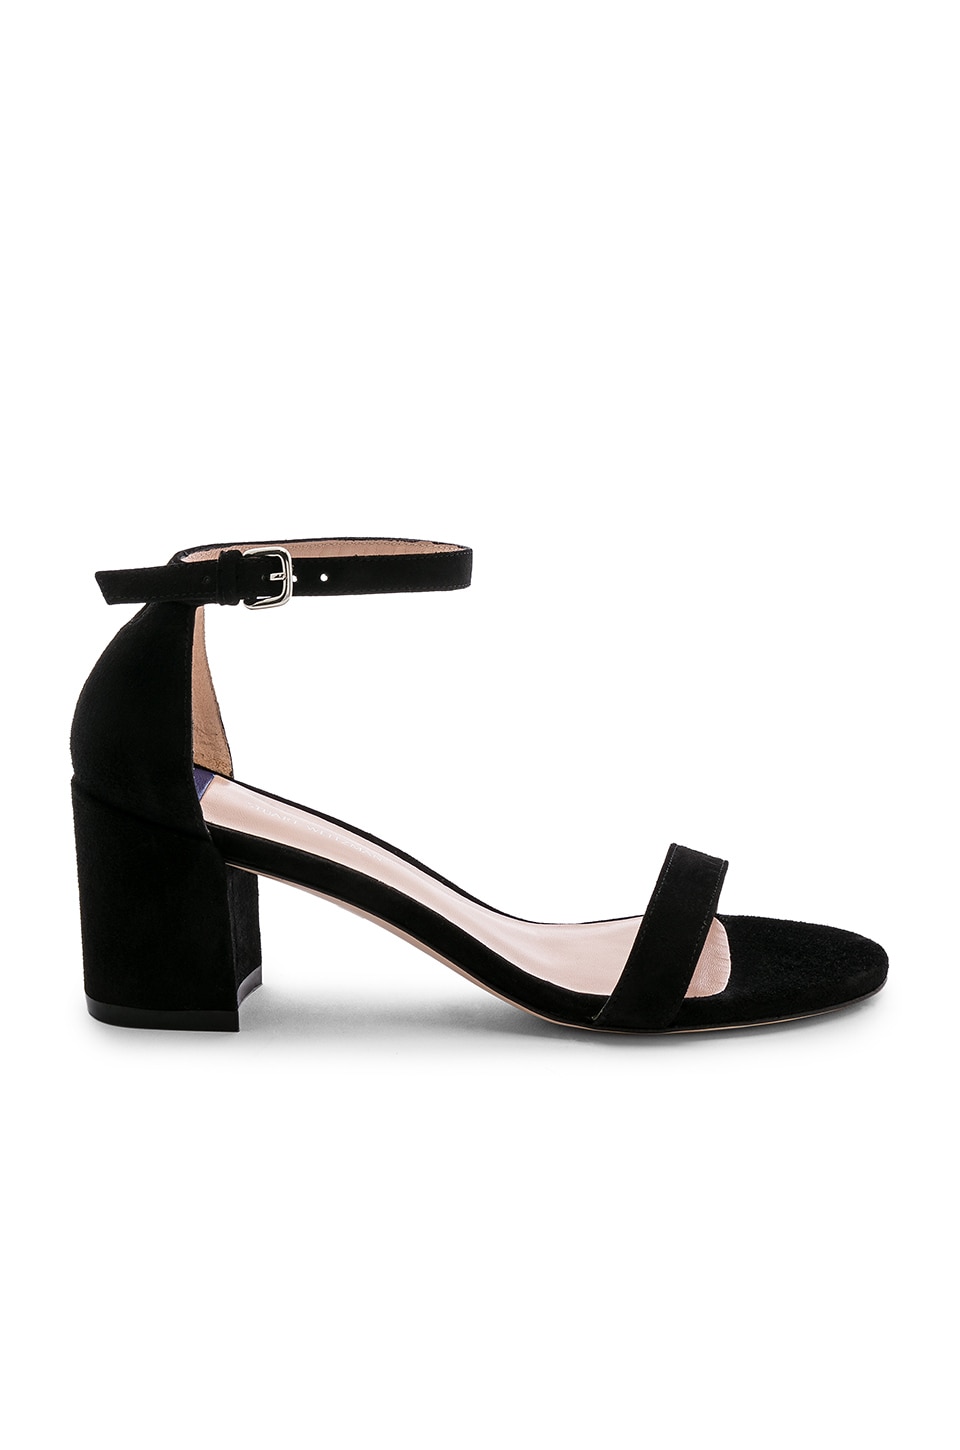 Stuart Weitzman Simple Sandal in Black | REVOLVE